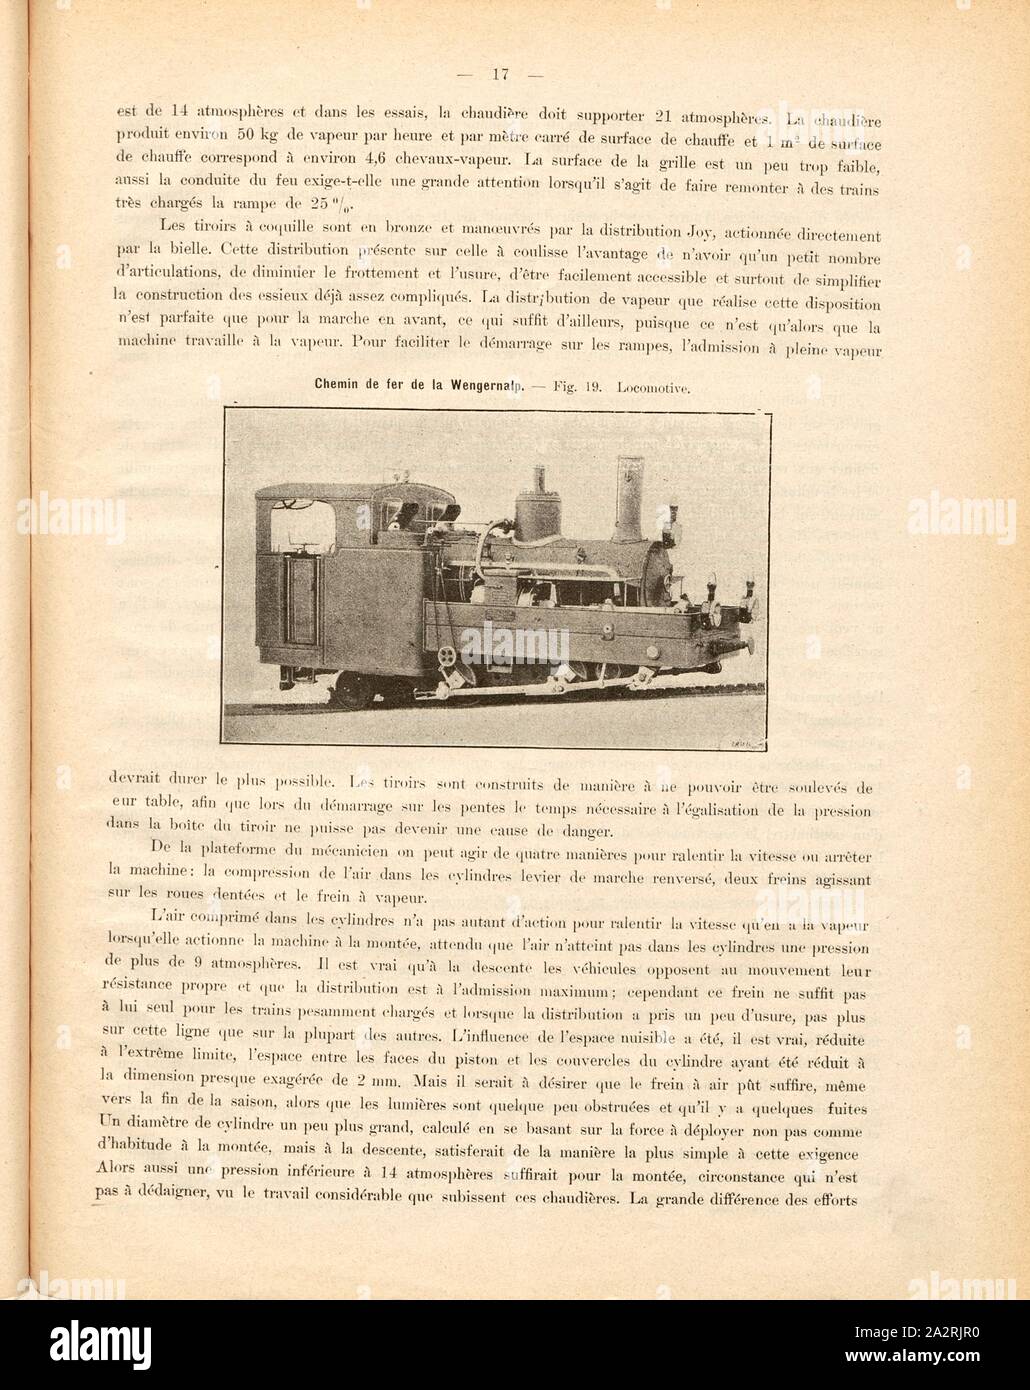 Lok, Lokomotive der Zahnradbahn, Abb. 19, S. 17, 1893, Emil Strub: Le Chemin de fer de la Wengernalp. [S.l.] : [s.n.], 1893 Stockfoto